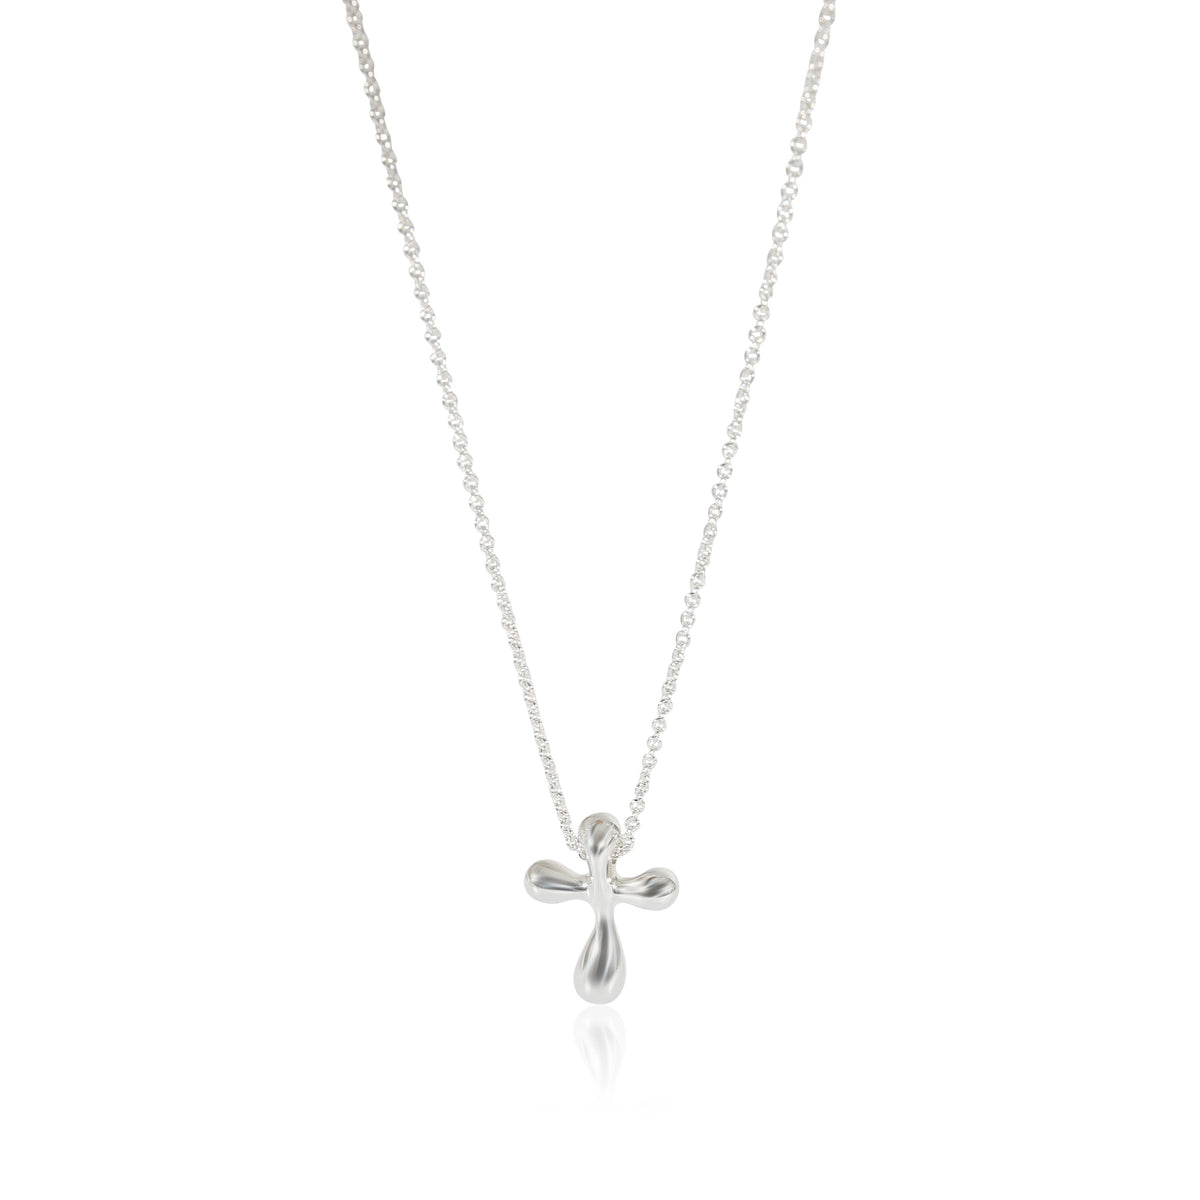 Tiffany & Co. Elsa Peretti Vintage Cross Pendant in  Sterling Silver